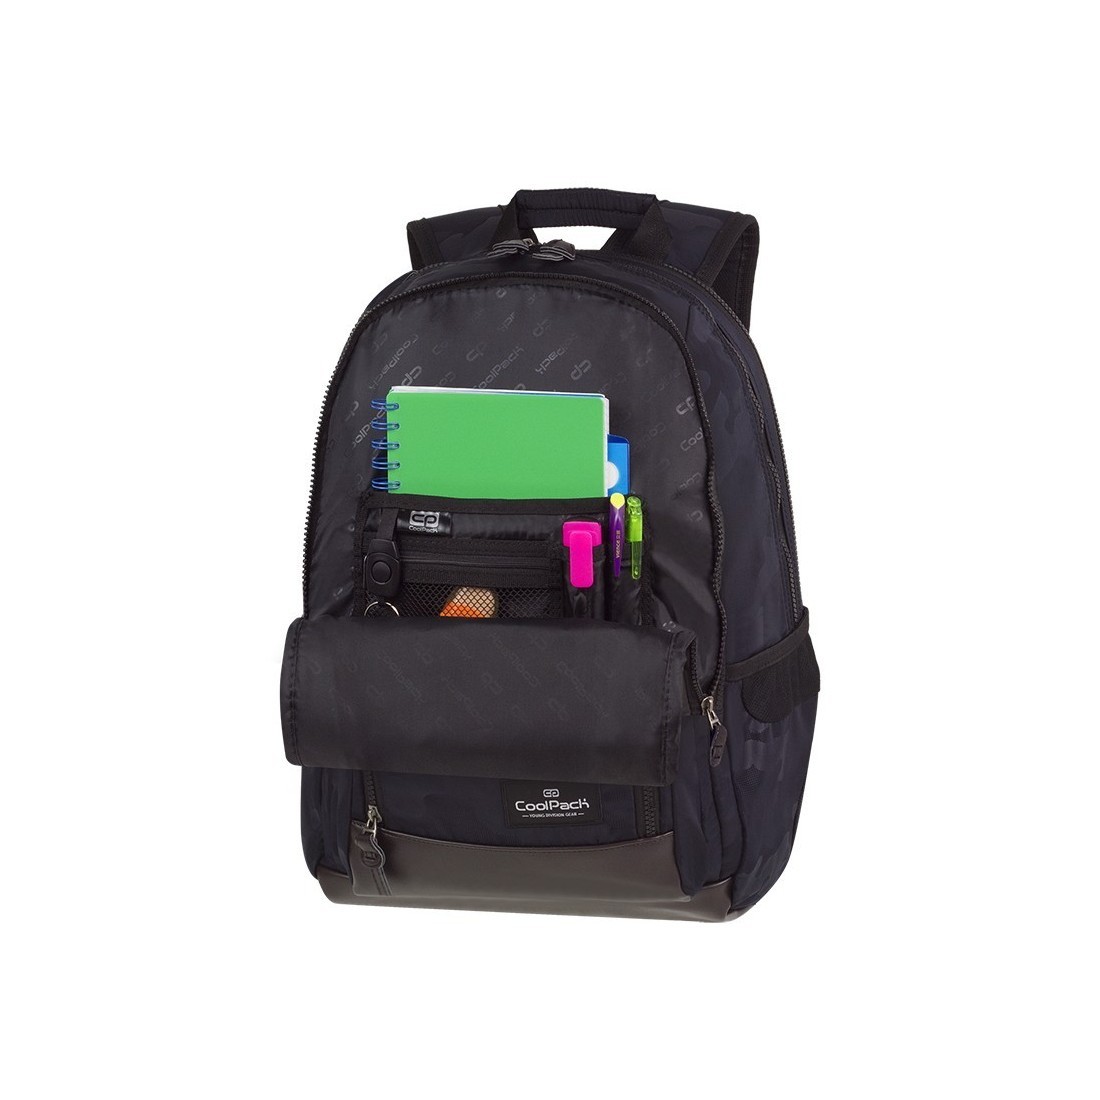 Plecak szkolny CoolPack na laptopa UNIT czarne moro - dla chłopaka - plecak-tornister.pl